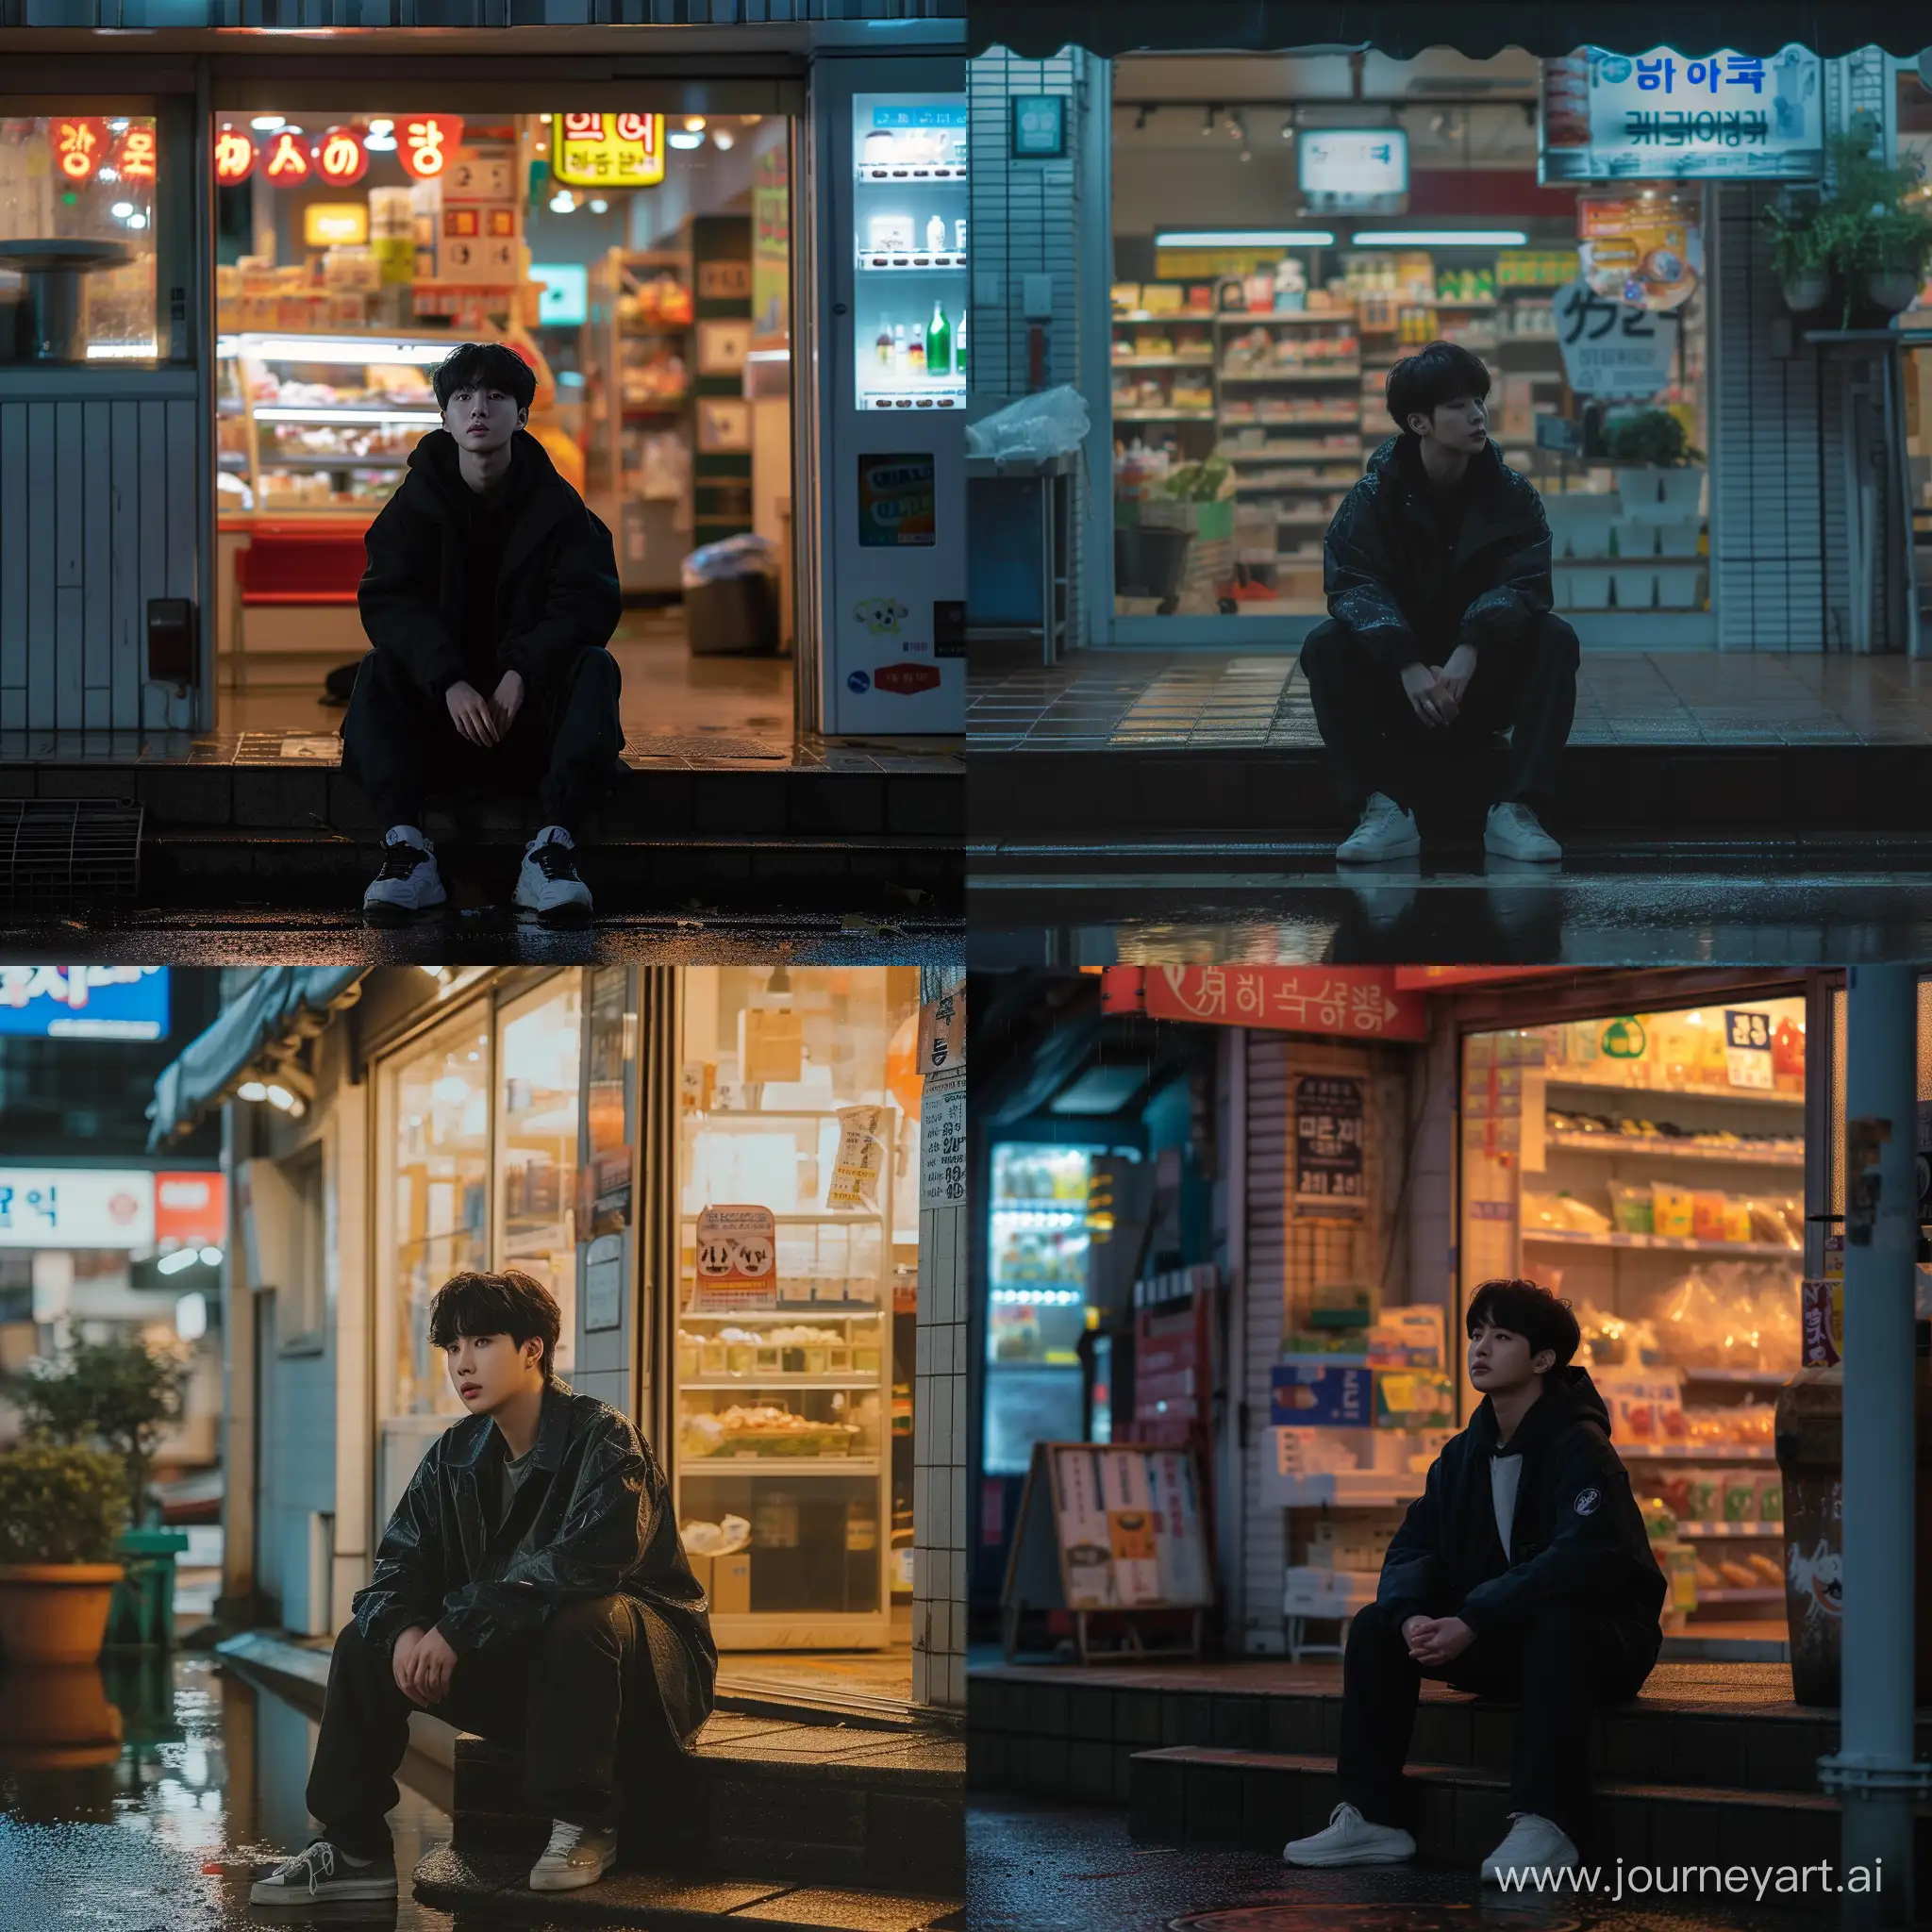 Min-Yoongi-Lookalike-Resting-Outside-Store-on-Rainy-Evening